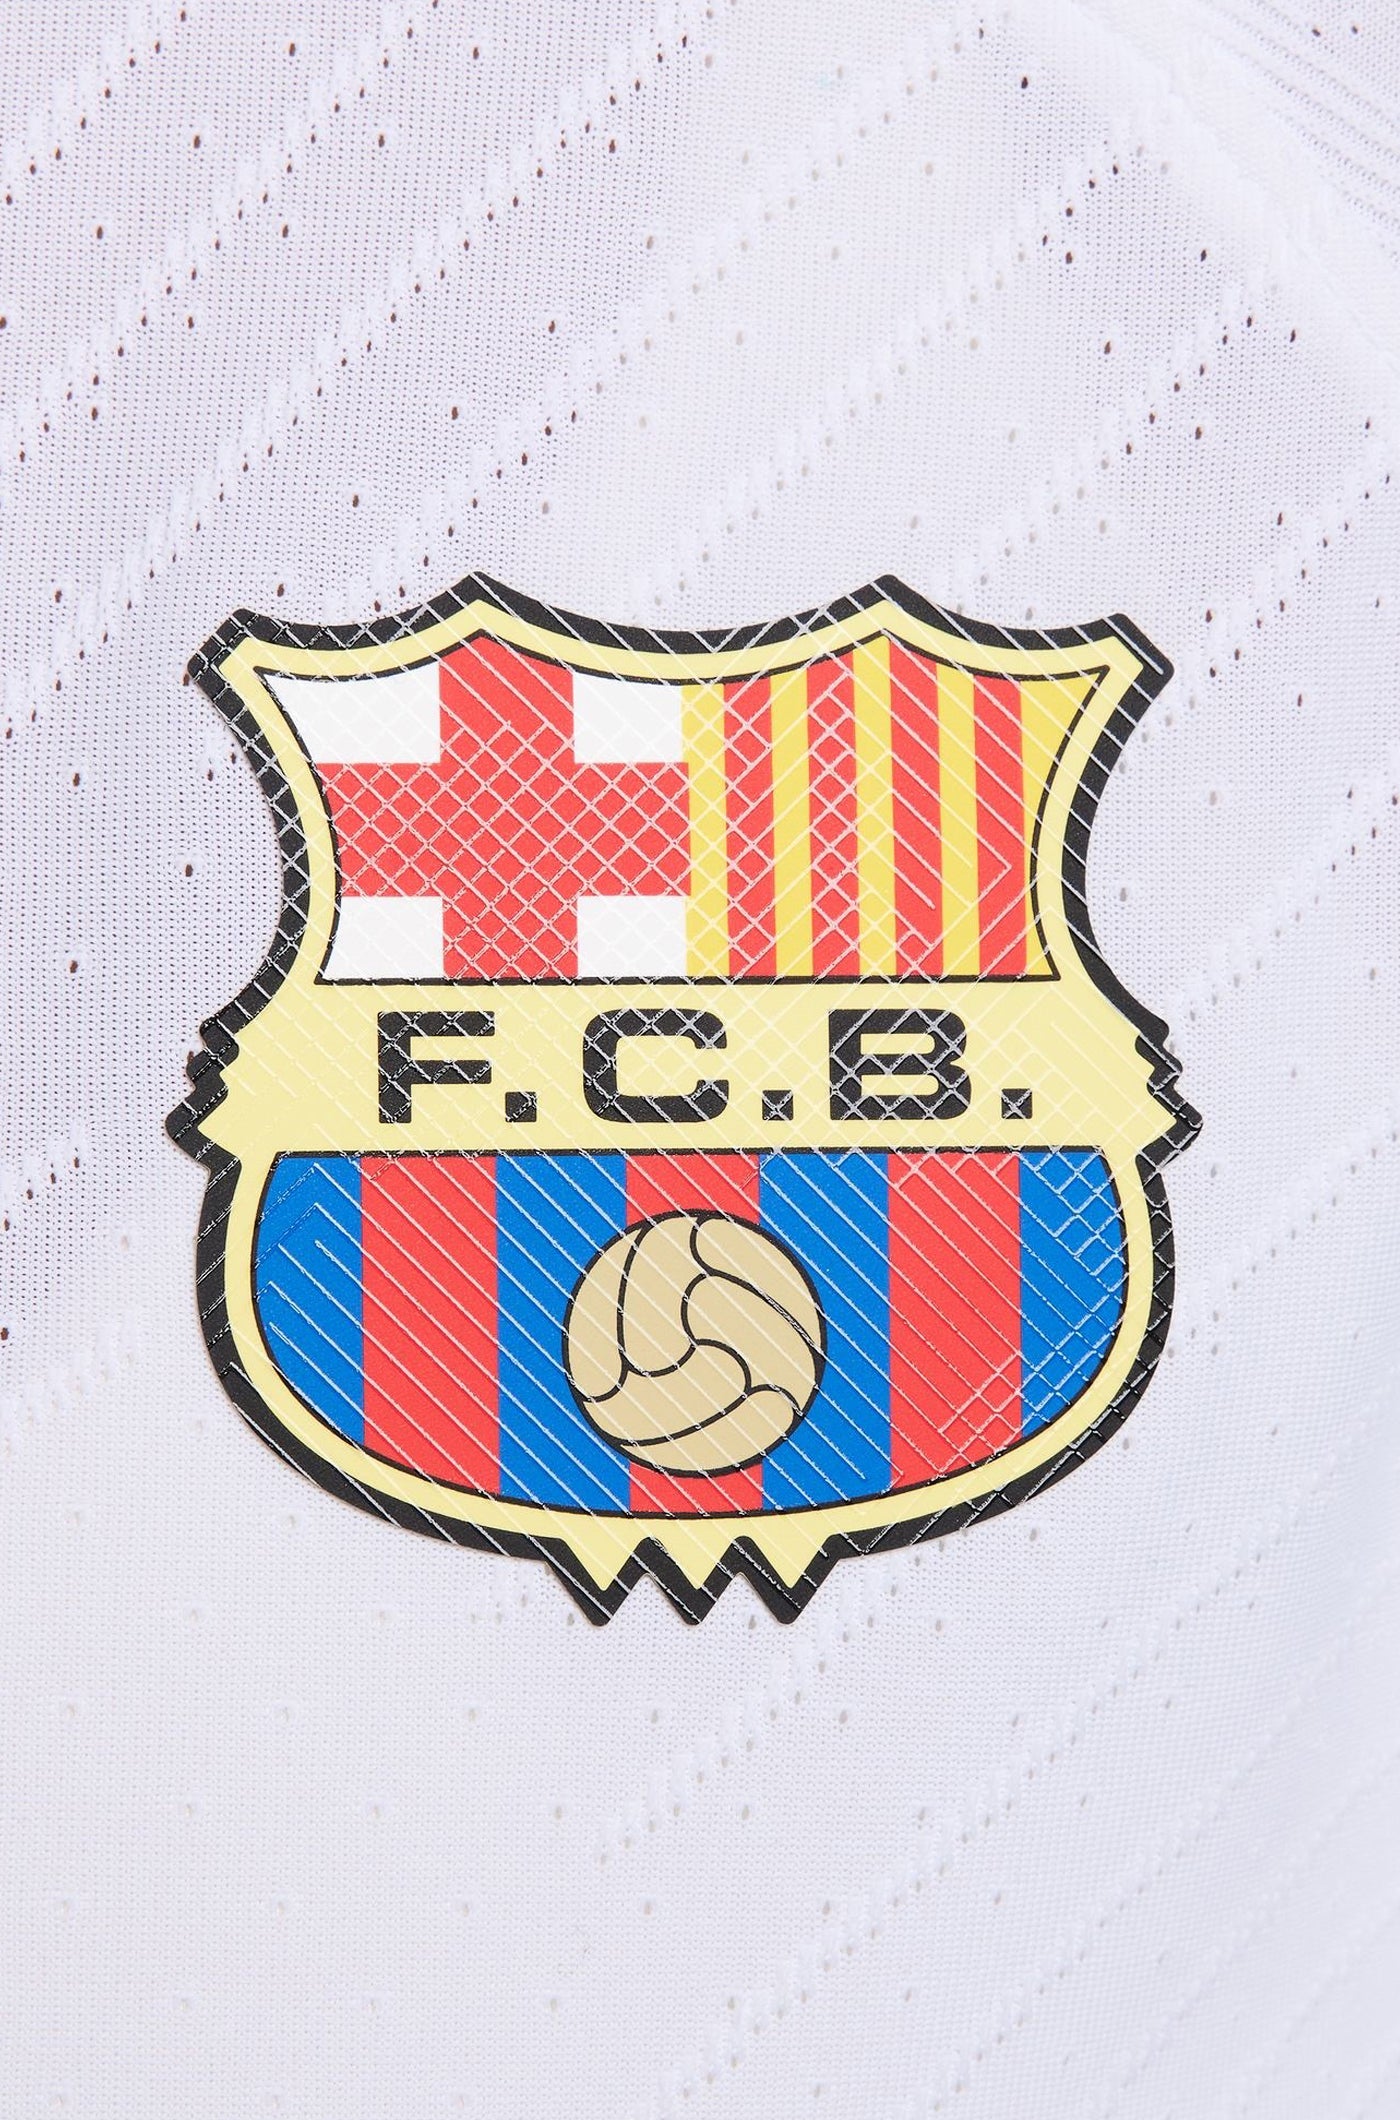 Liga F FC Barcelona away shirt 23/24 Player’s Edition - Women